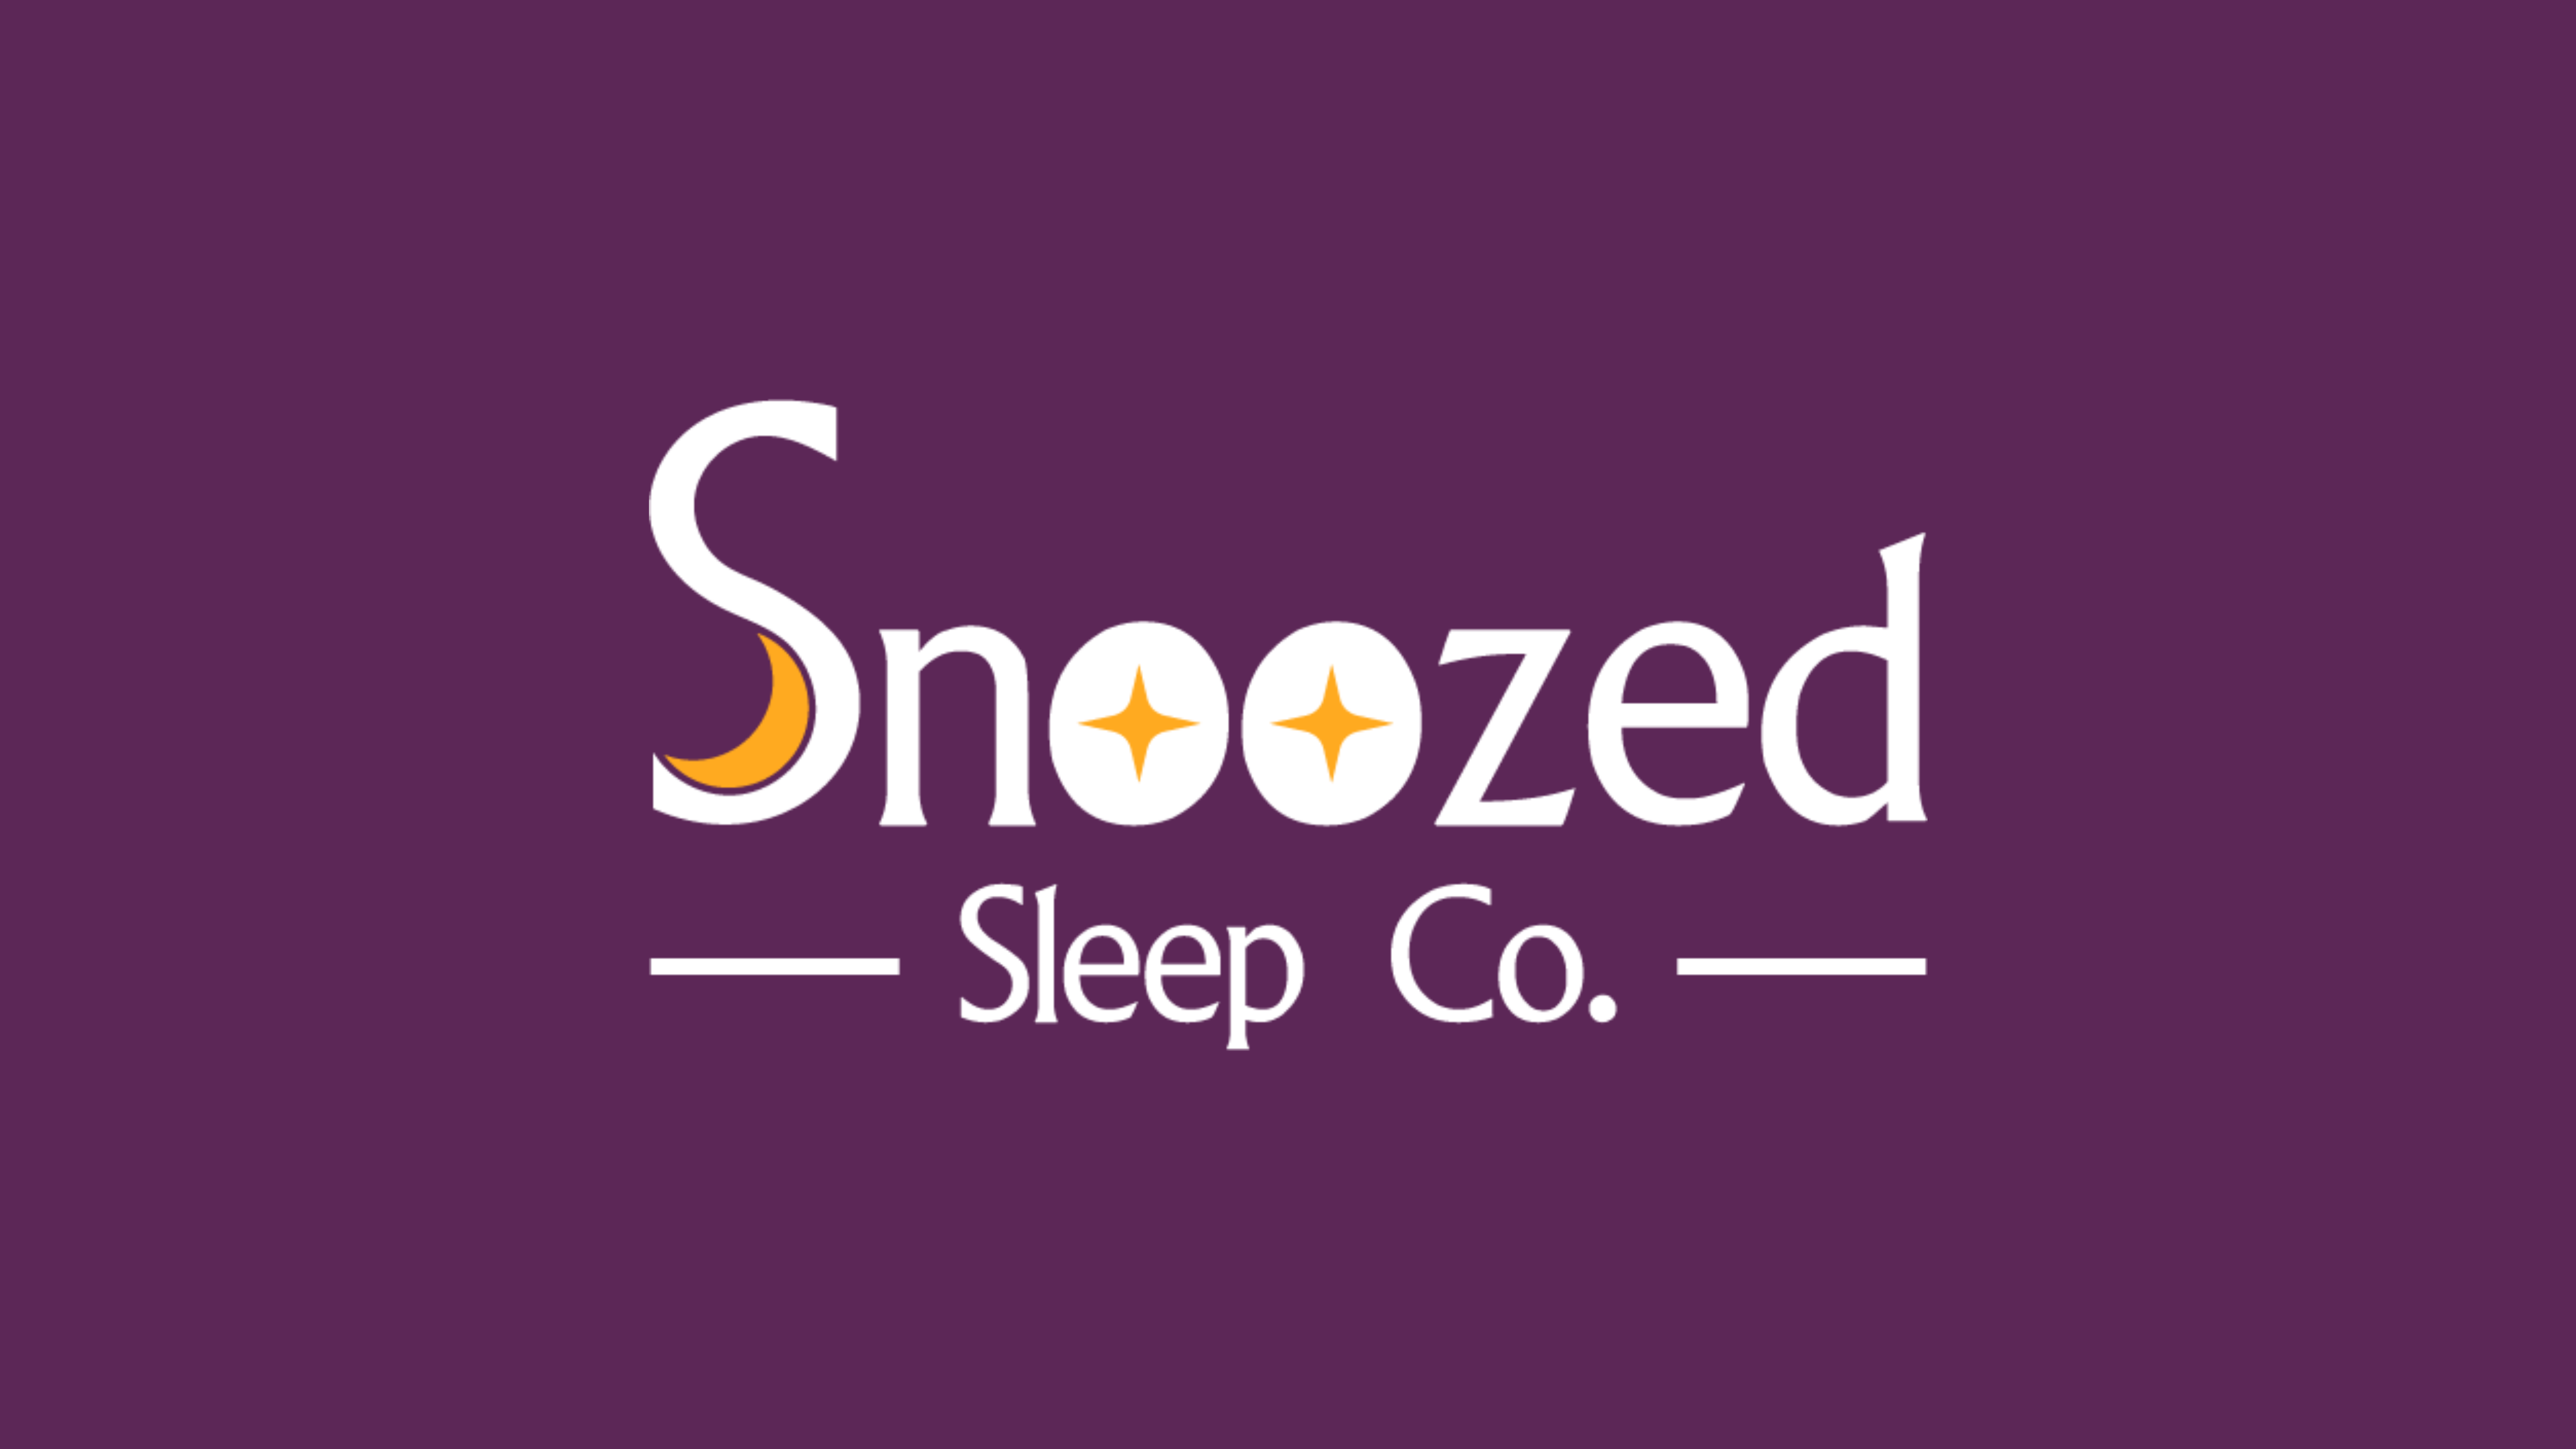 Snoozed Sleep Co.